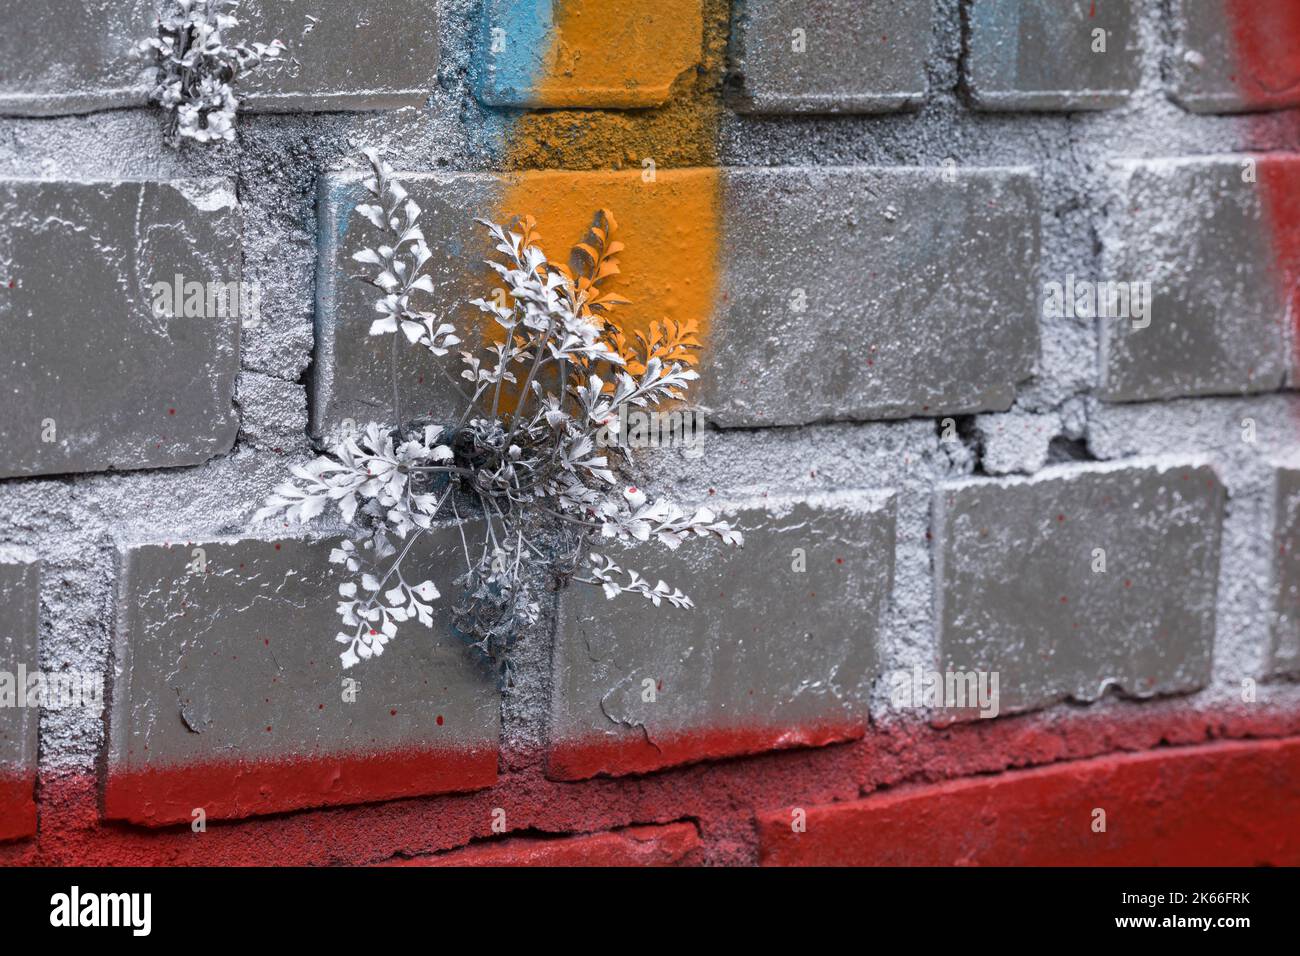 Wallrue spleenwort (Asplenium ruta-muraria), growing at a wall, sprayed with graffiti, Germany Stock Photo